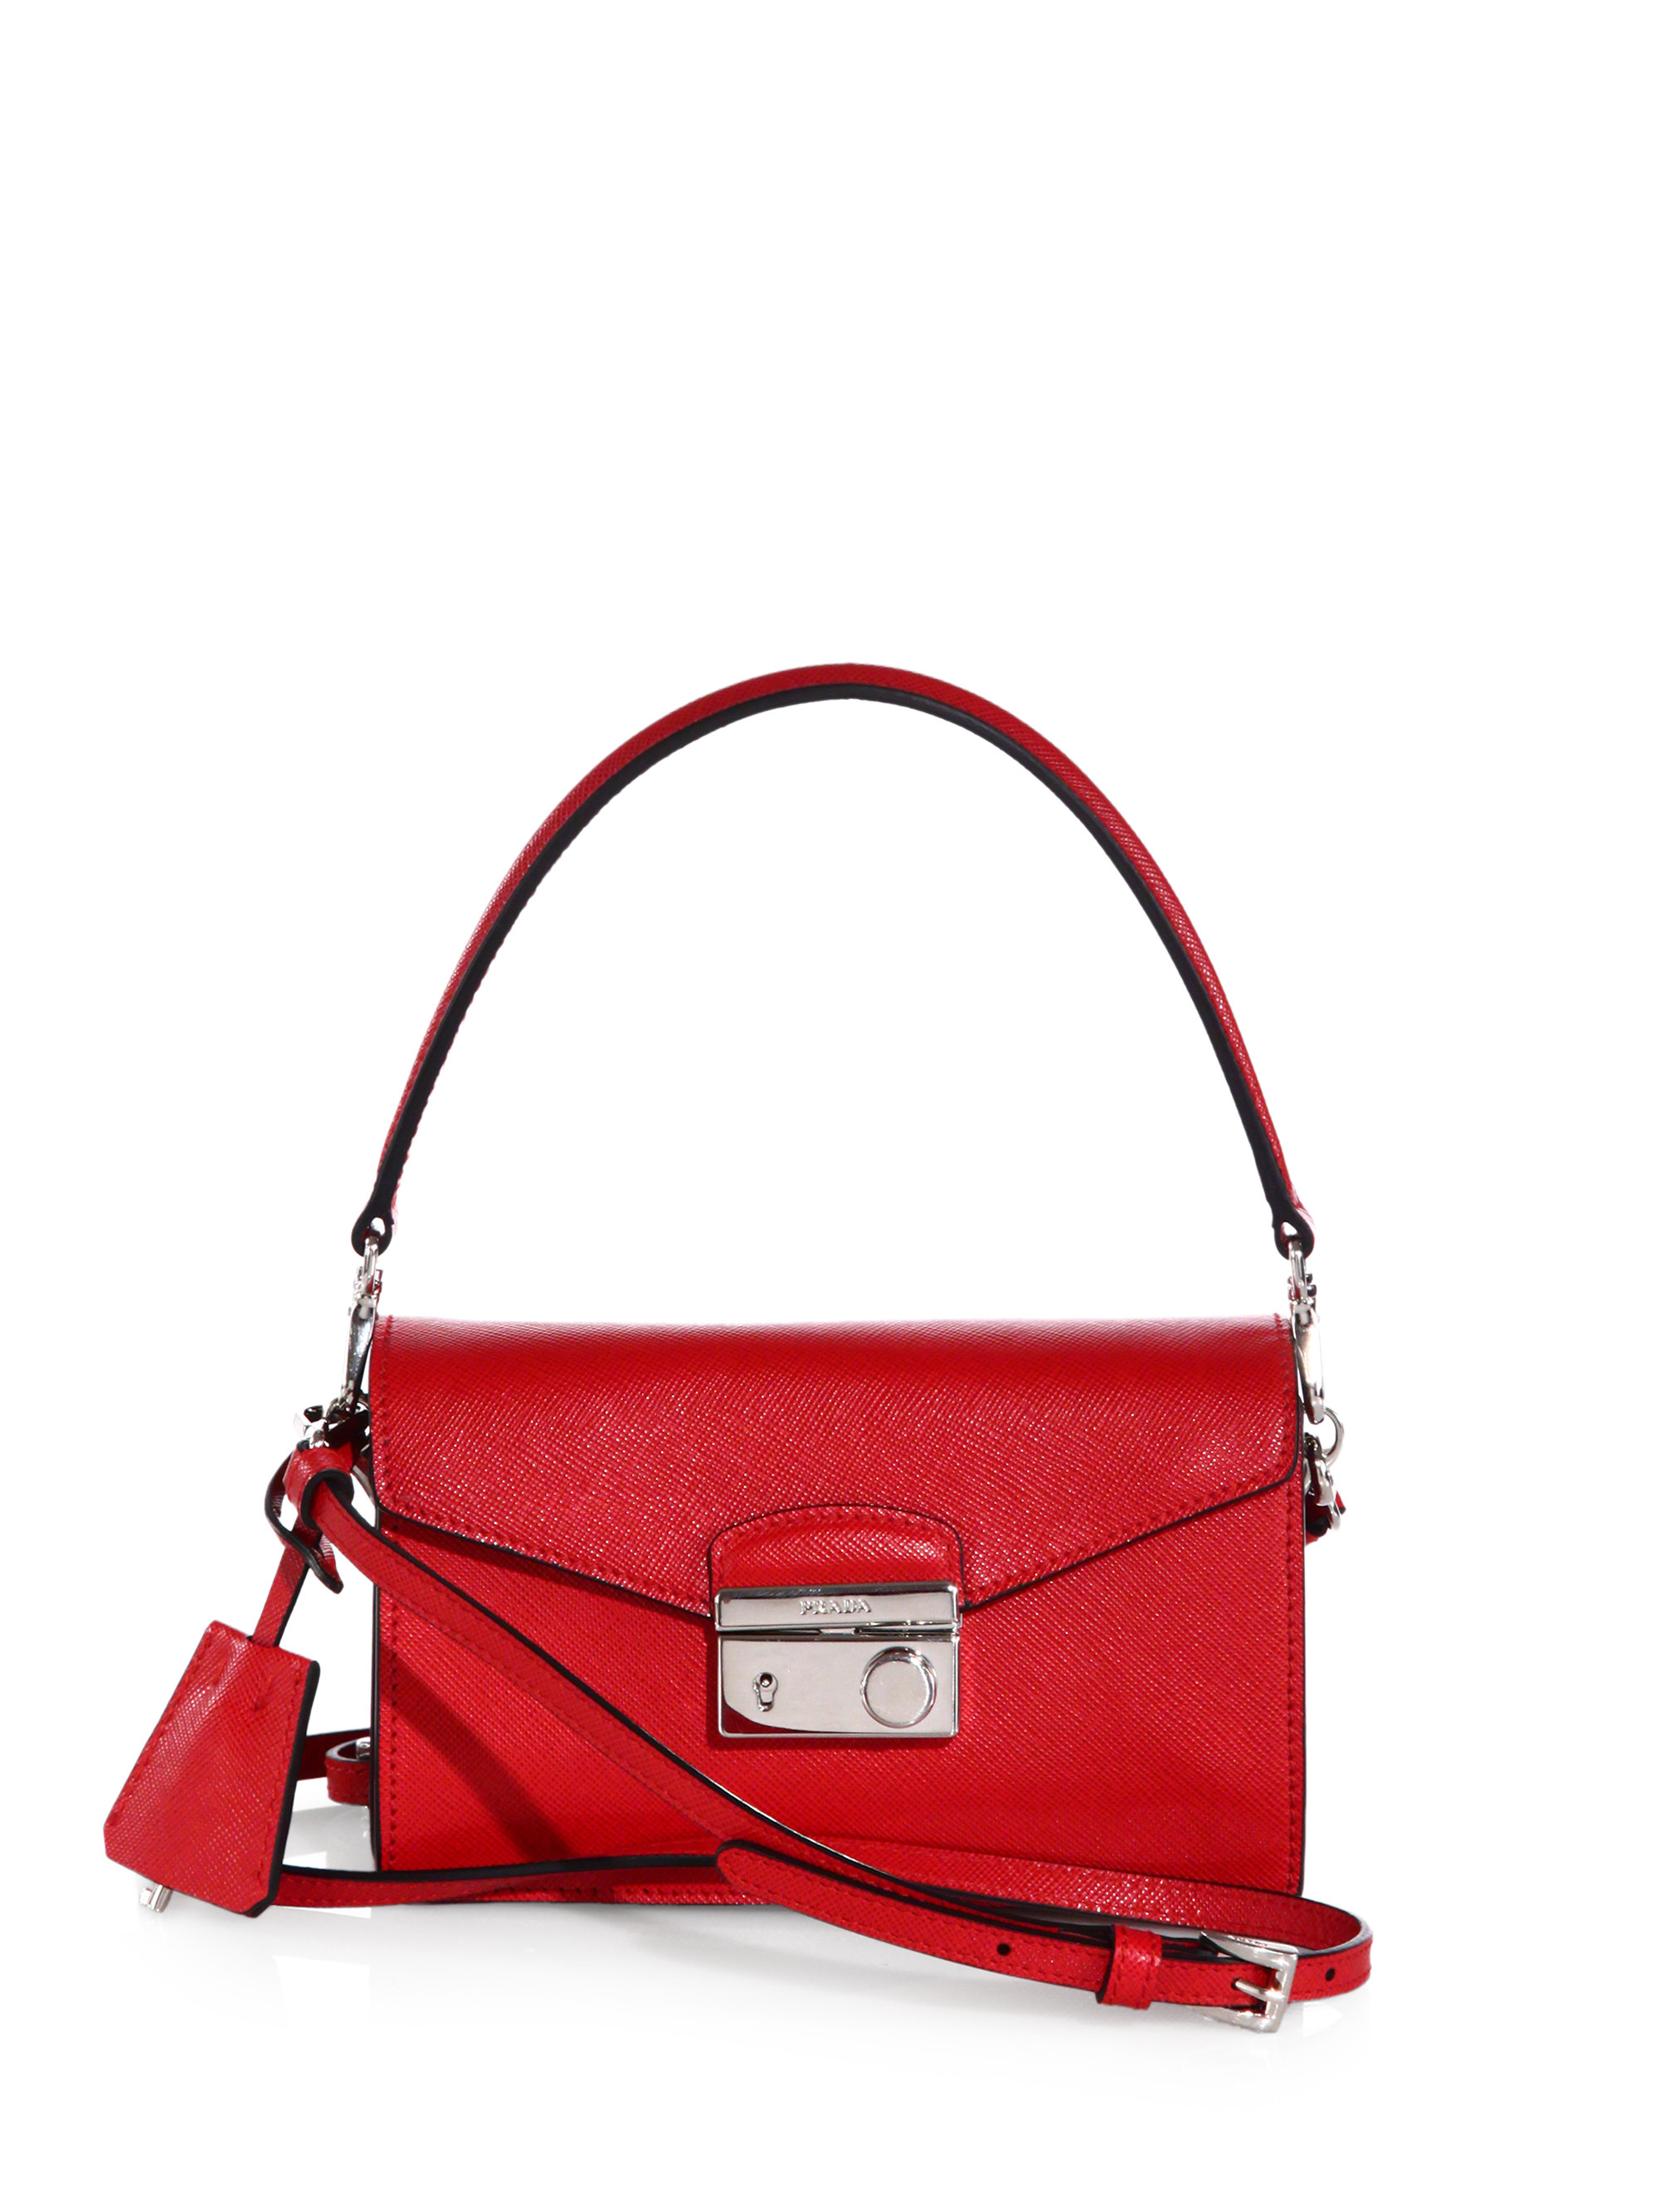 Prada Saffiano Leather Mini Sound Crossbody Bag in Red - Lyst